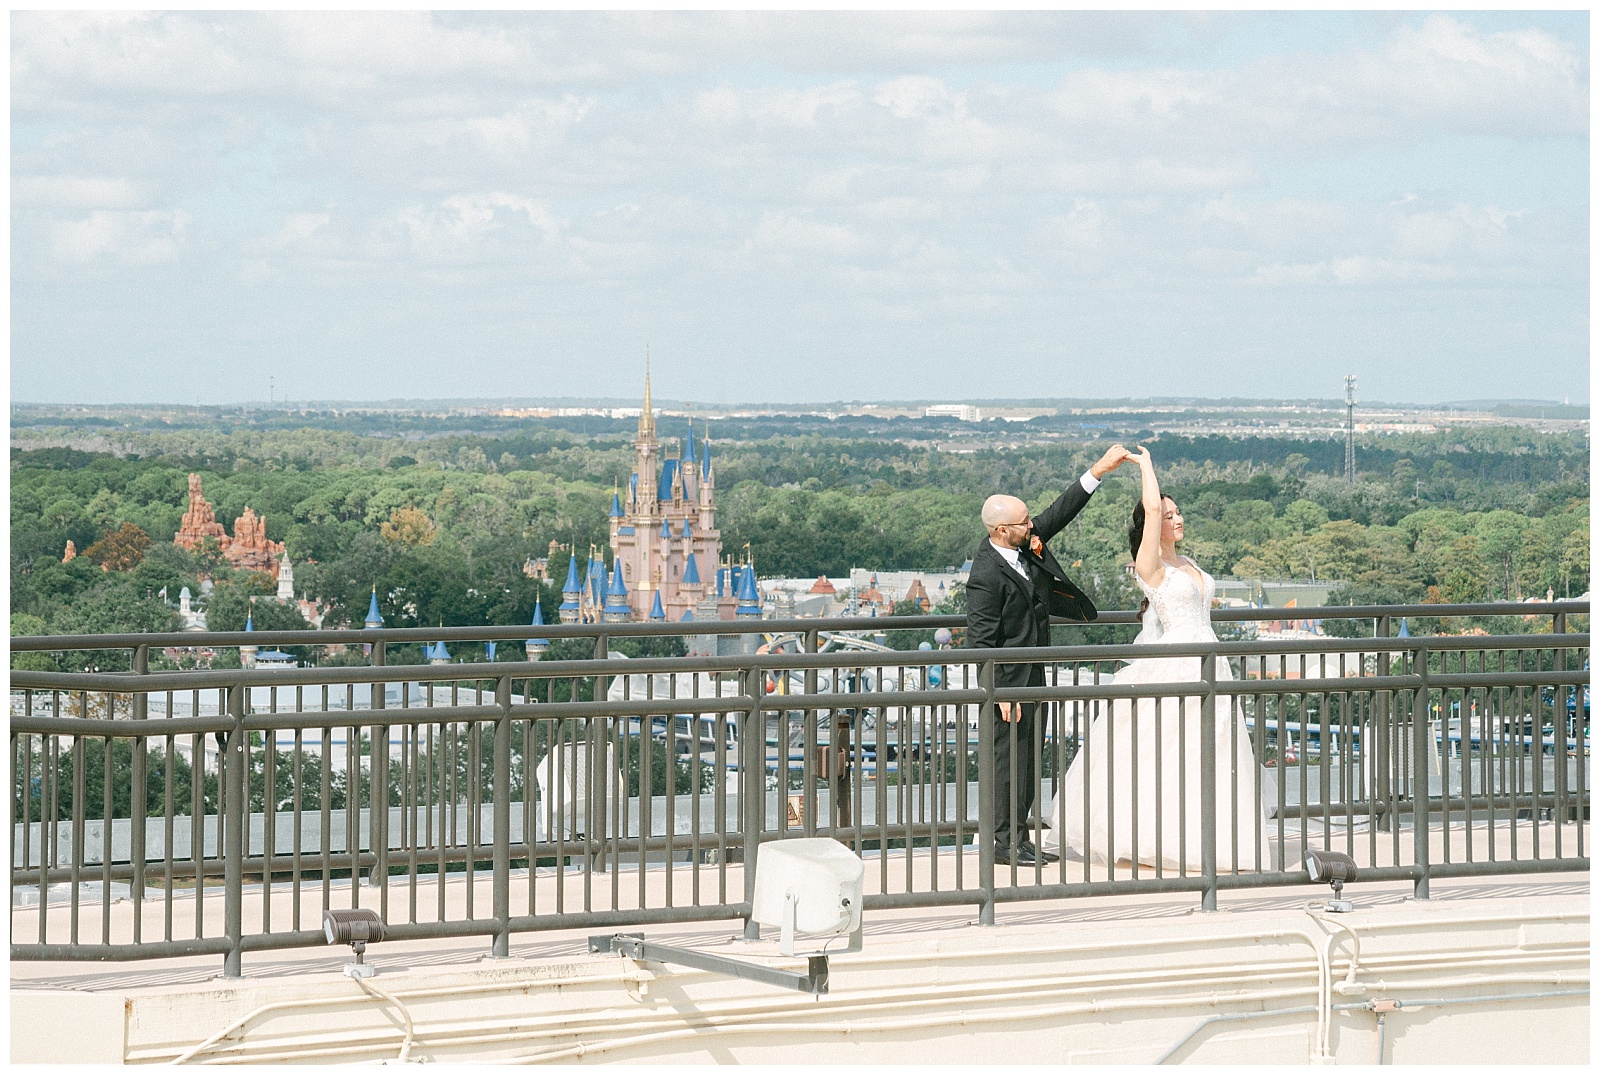 Sky bridge wedding reception photographs at the California Gill by Elizabeth Kane in Orlando Florida